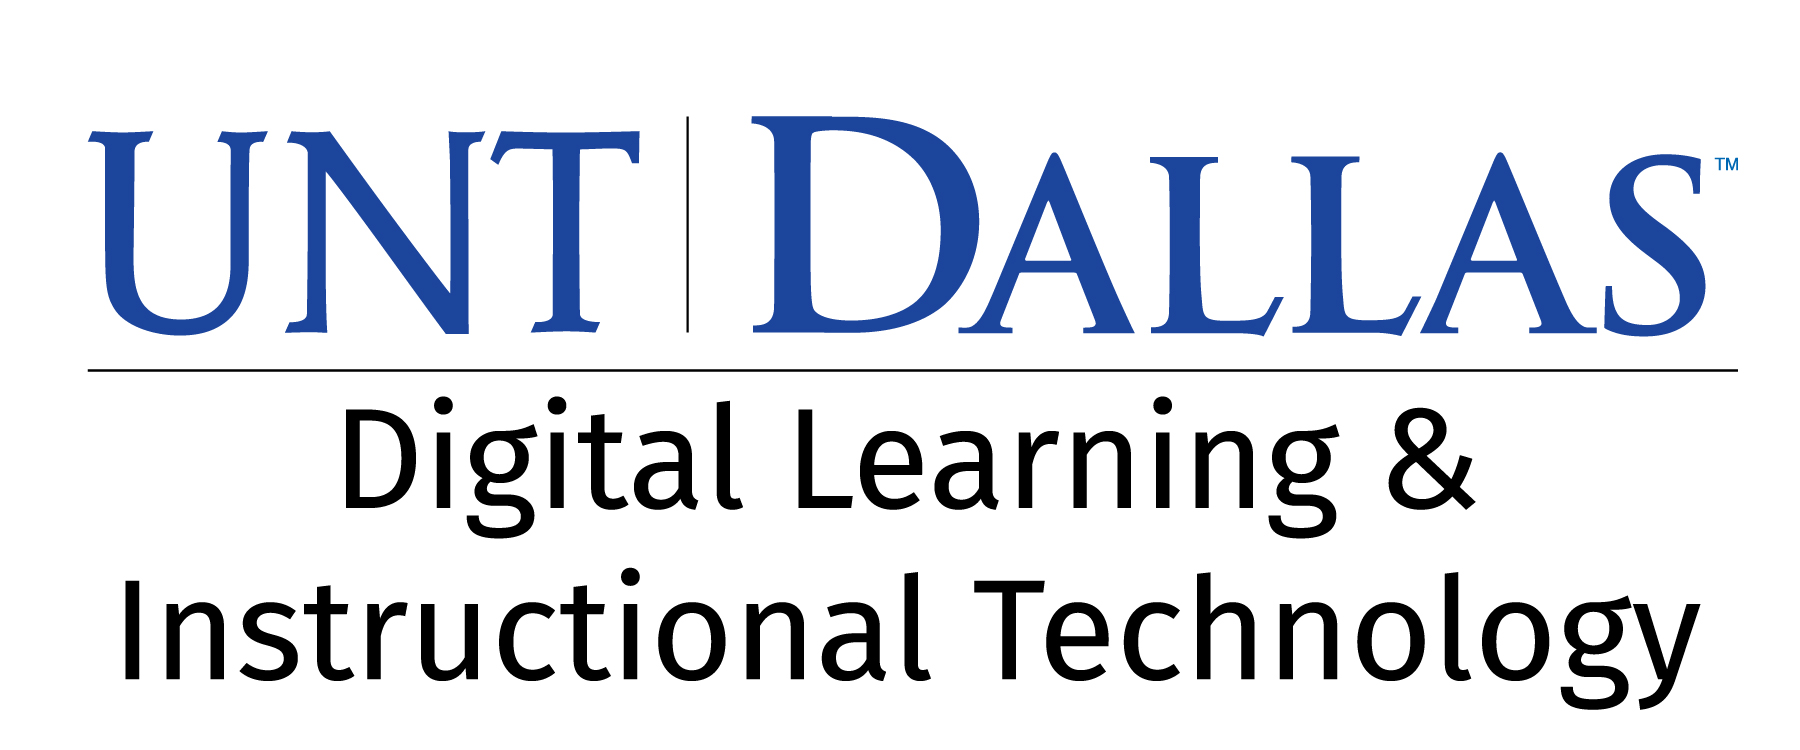 UNT Dallas Office of Digital Learning Logo